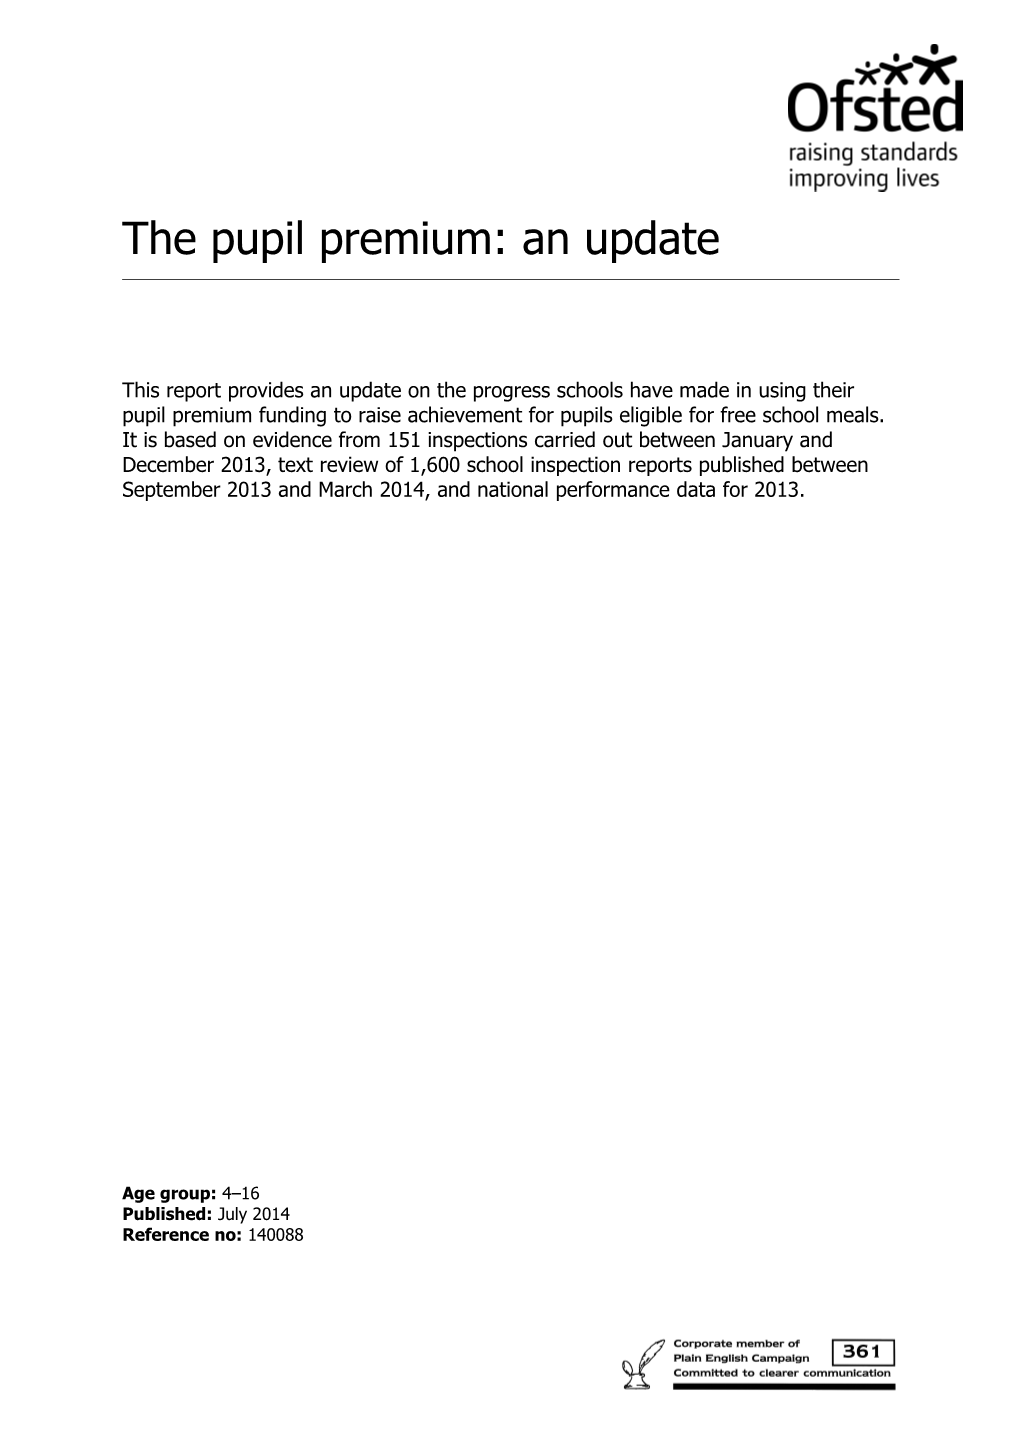 The Pupil Premium: an Update